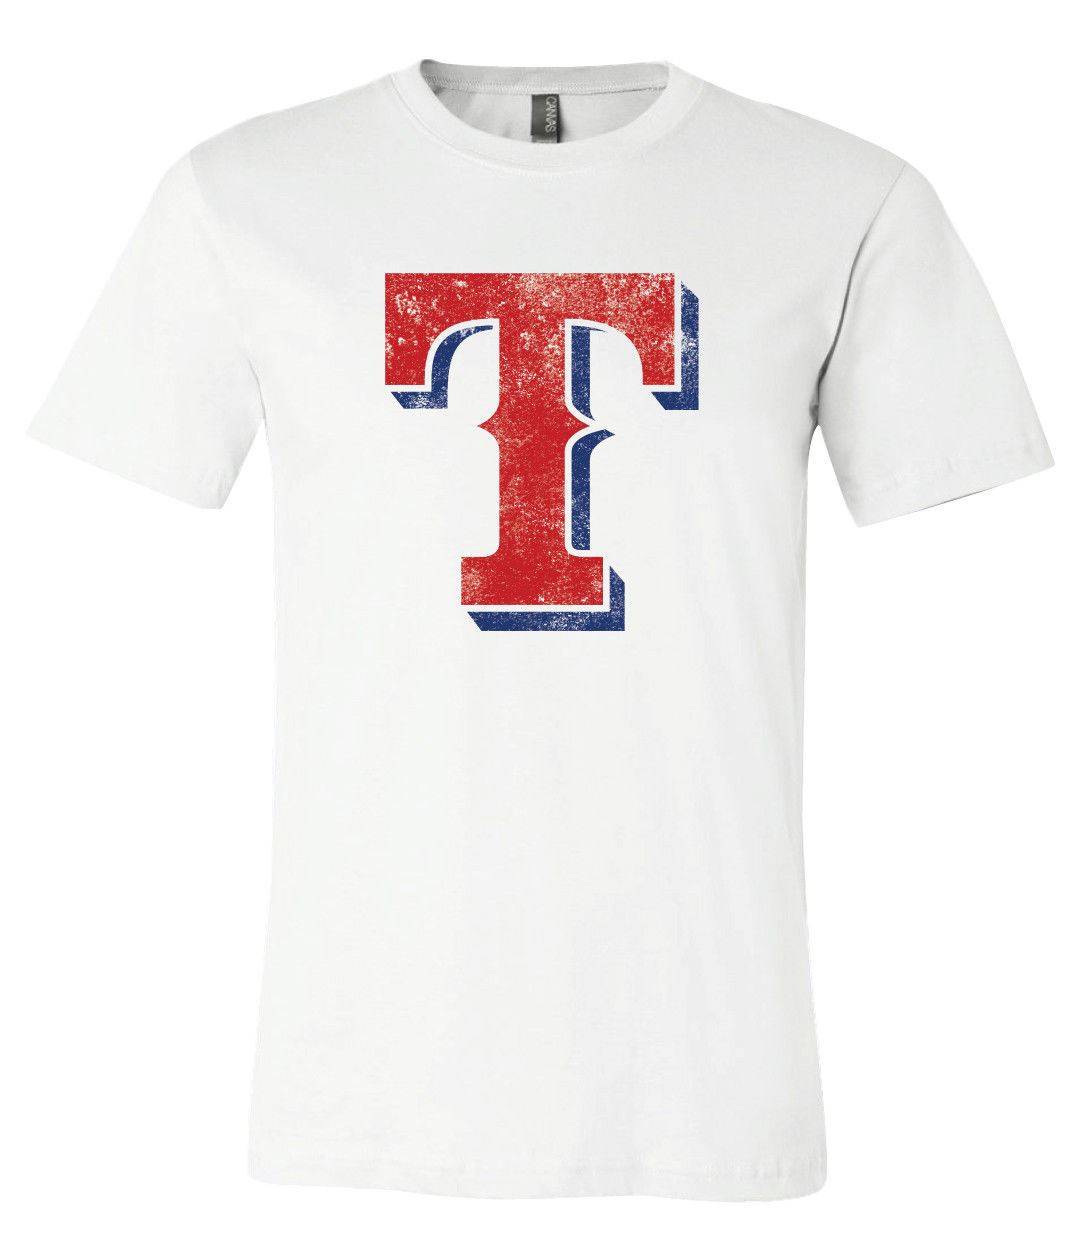 Red Jacket Texas Rangers T-Shirt - Men's T-Shirts in Light Blue